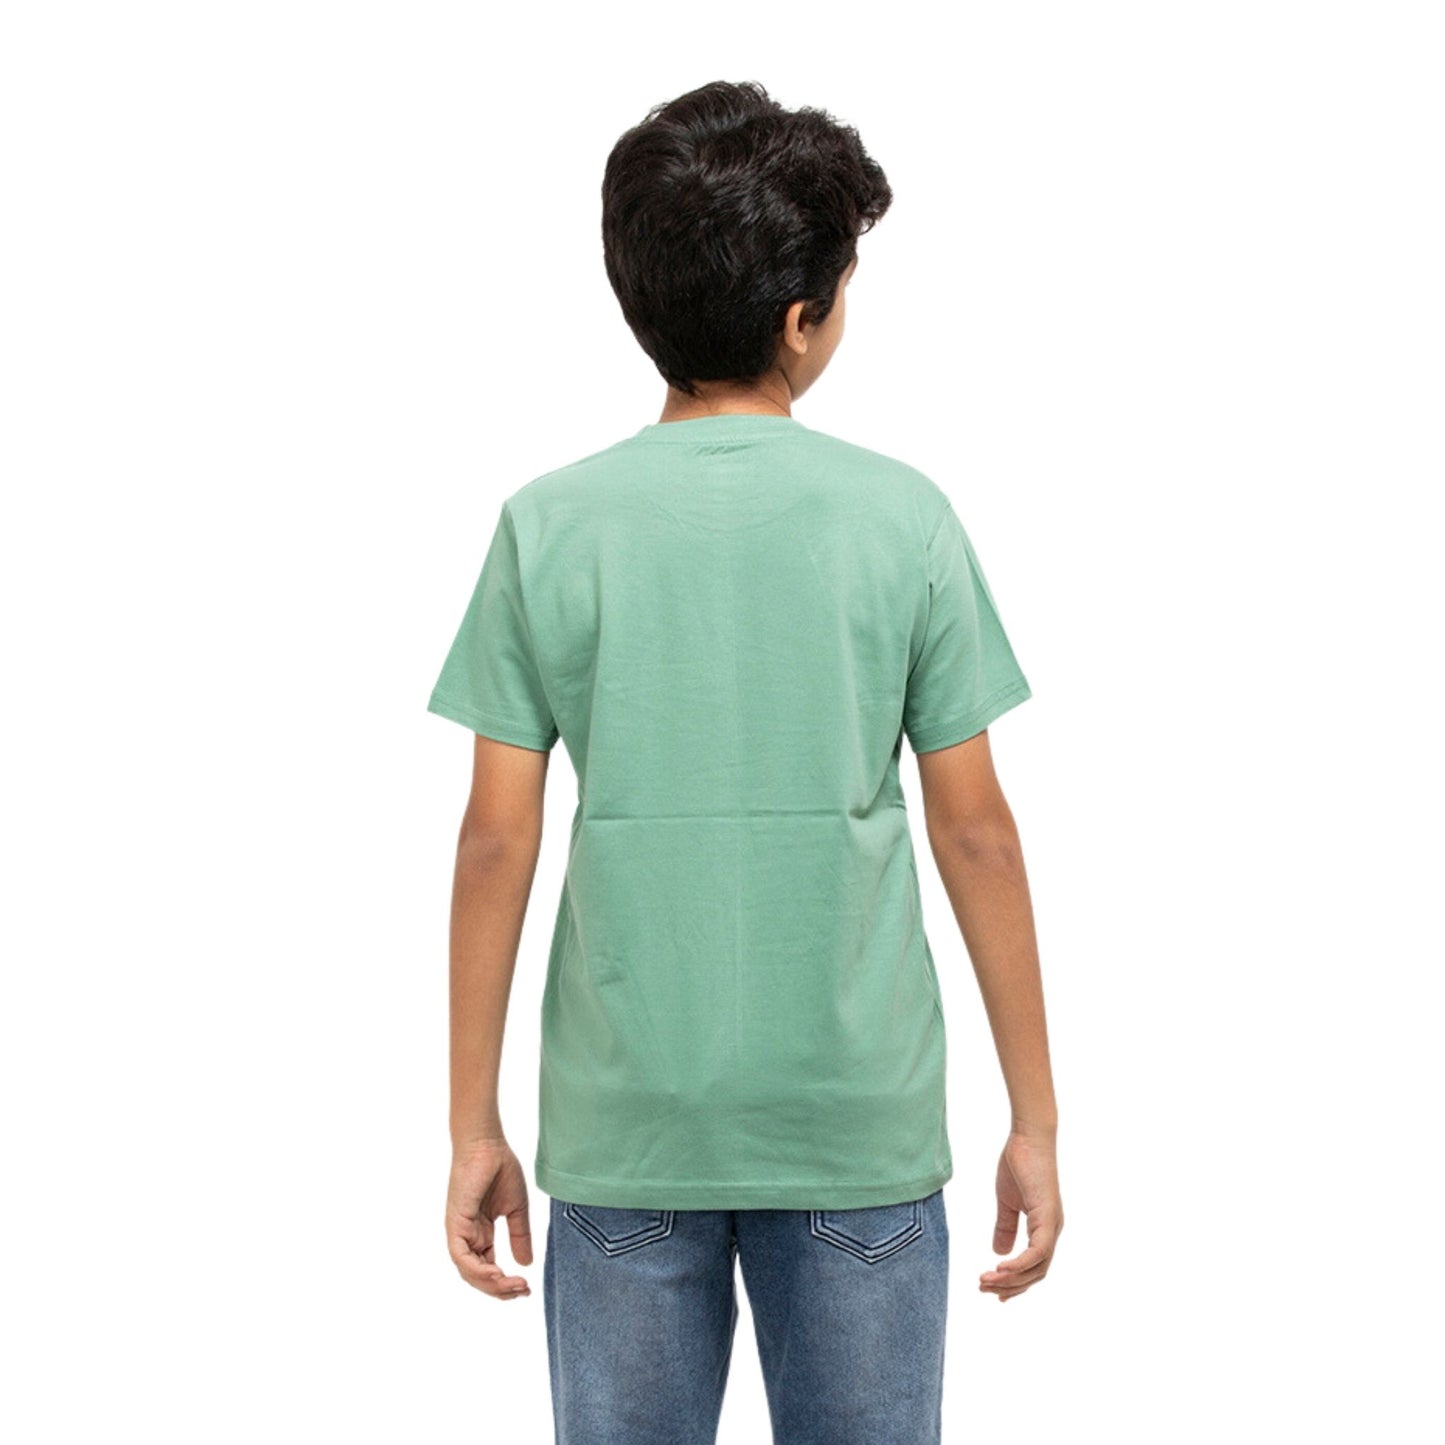 Bos Taurus Print Boys Cotton T-Shirt (Green)